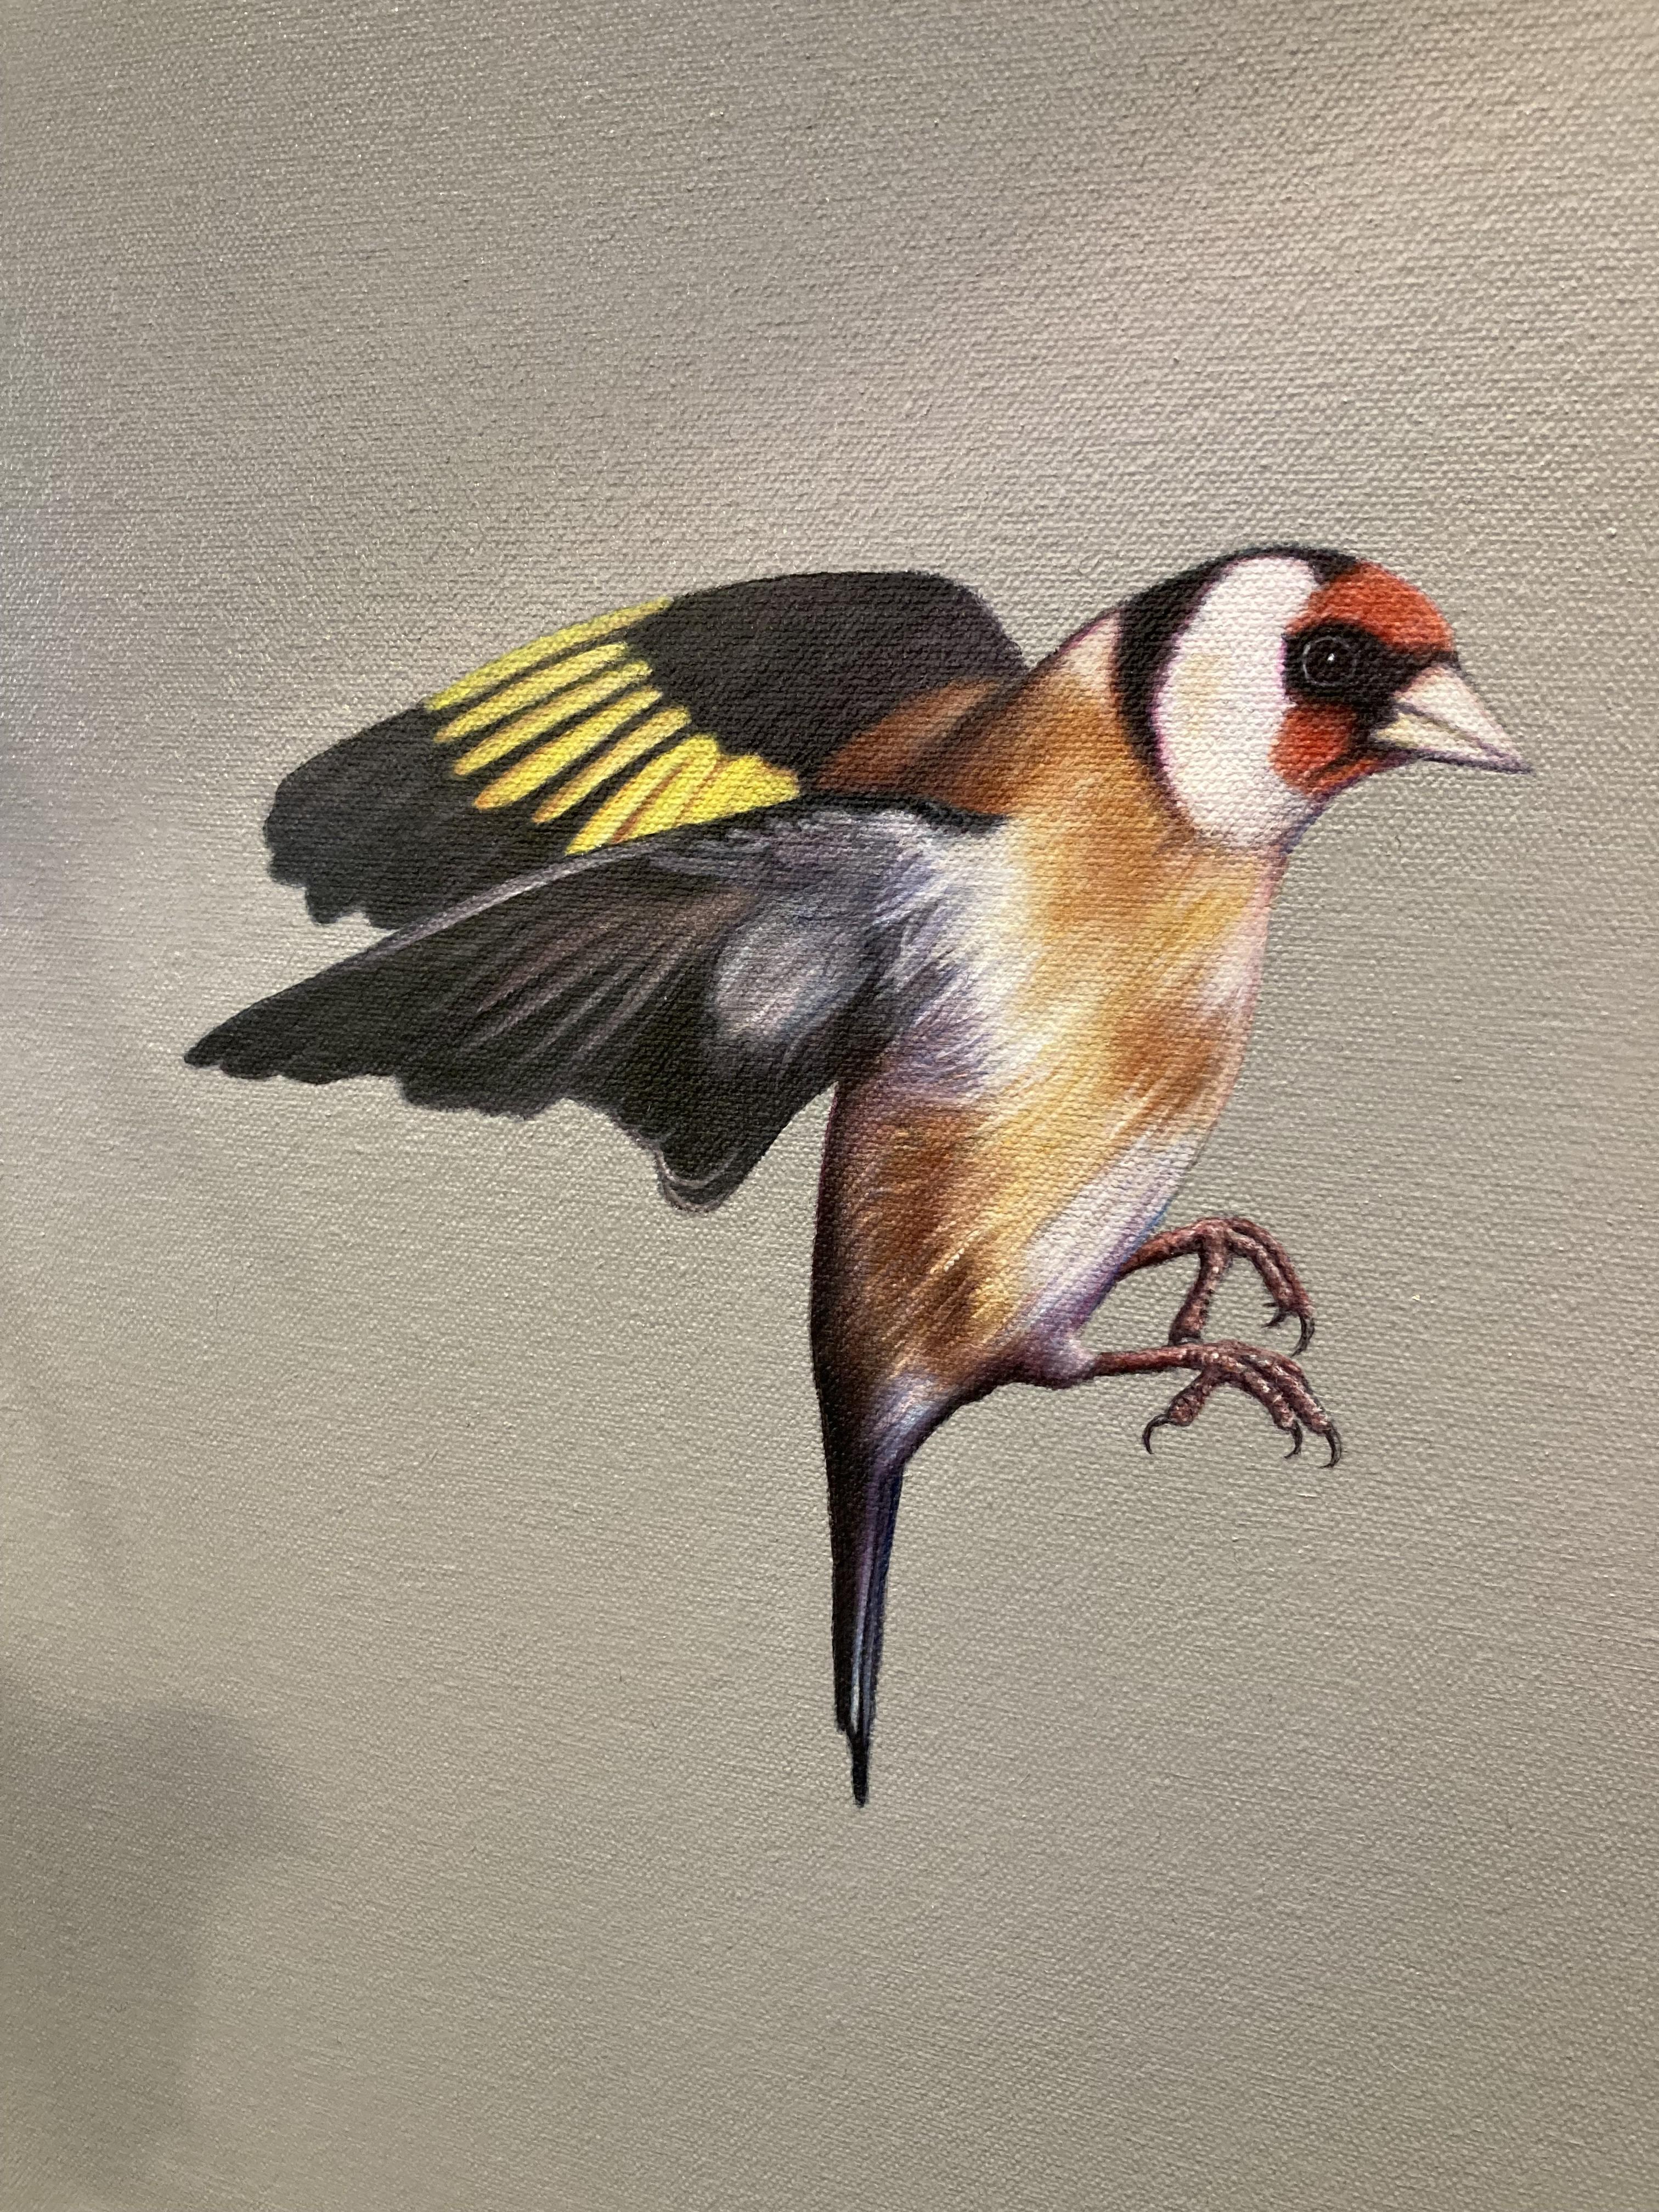 hyper realistic bird painting